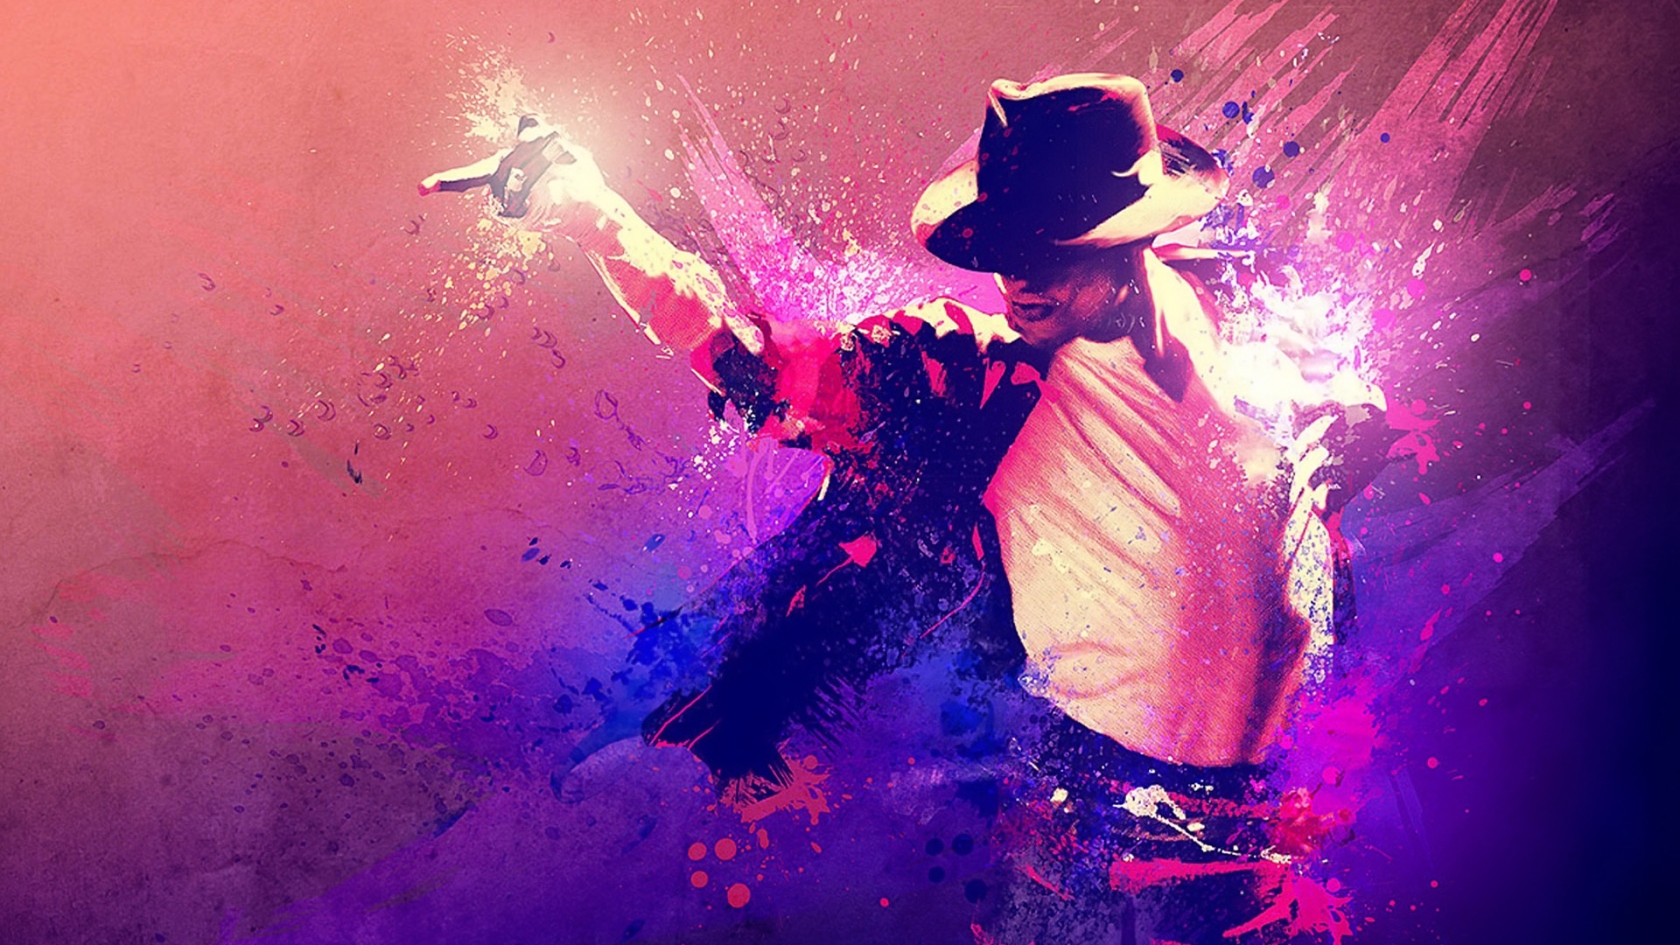 Michael Jackson Fanart for 1680 x 945 HDTV resolution